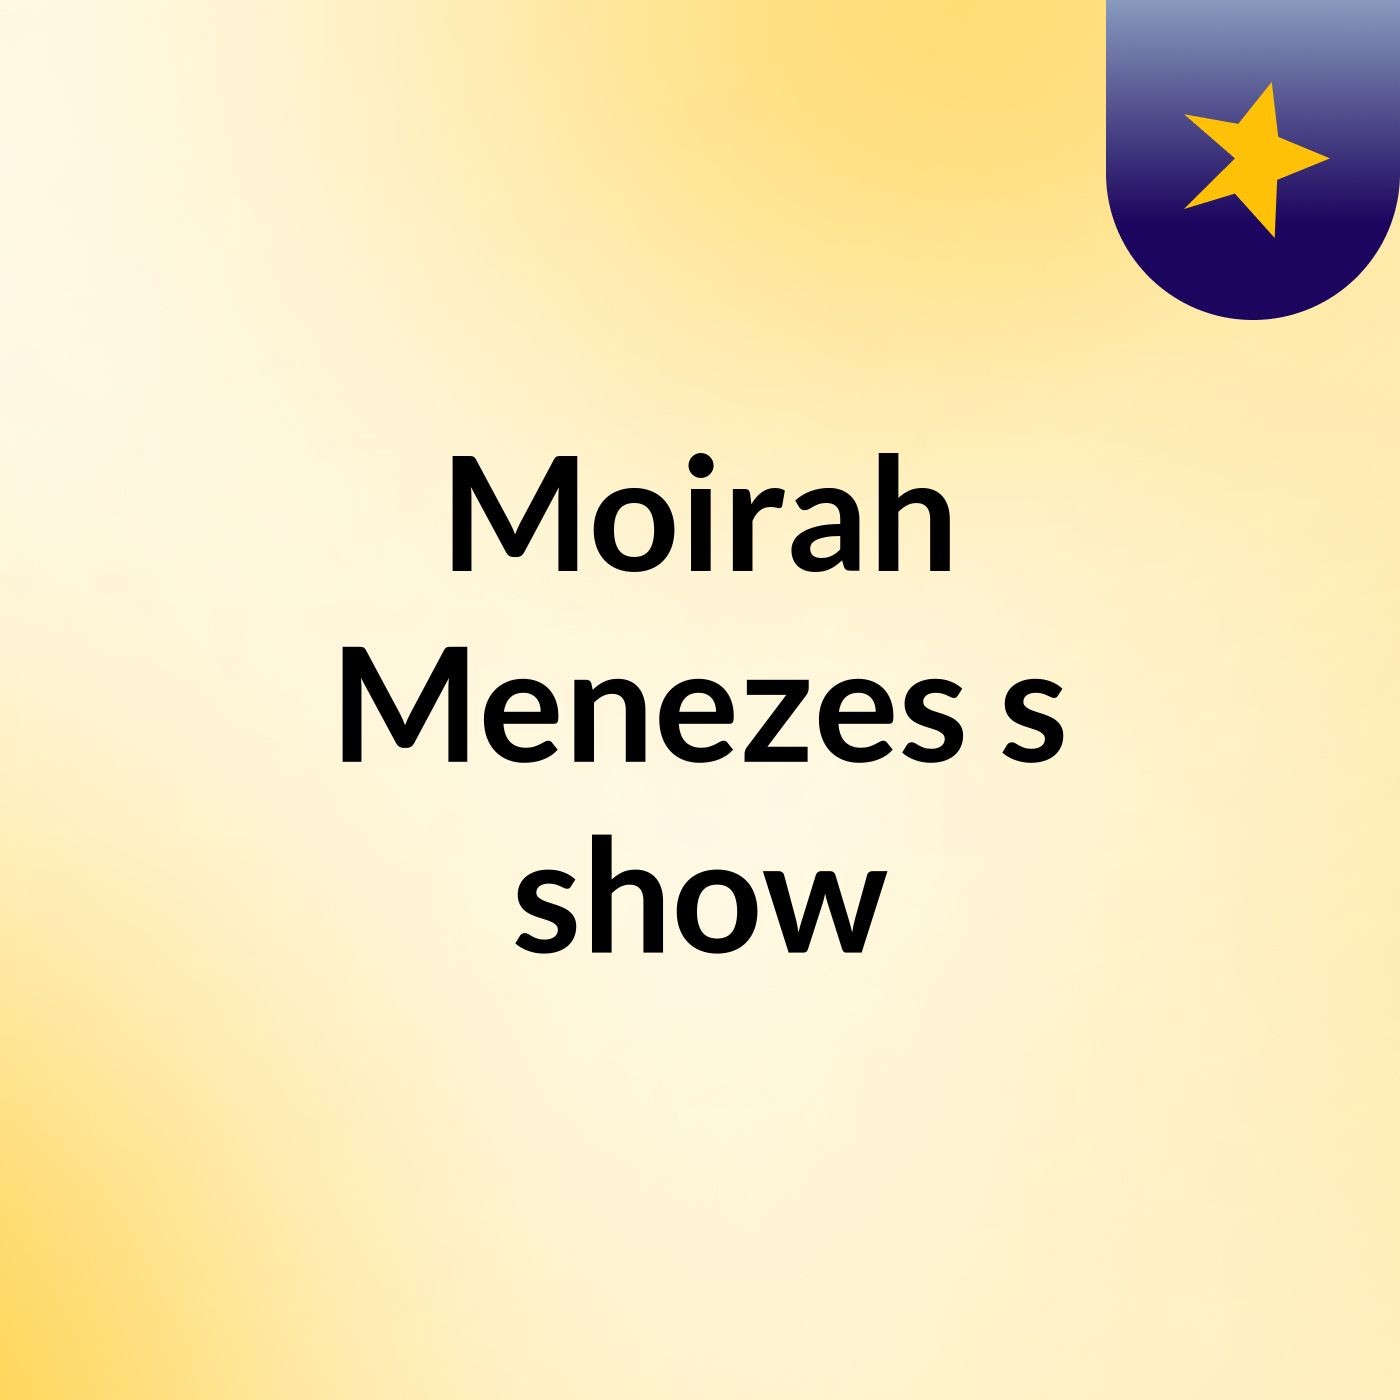 Moirah Menezes's show